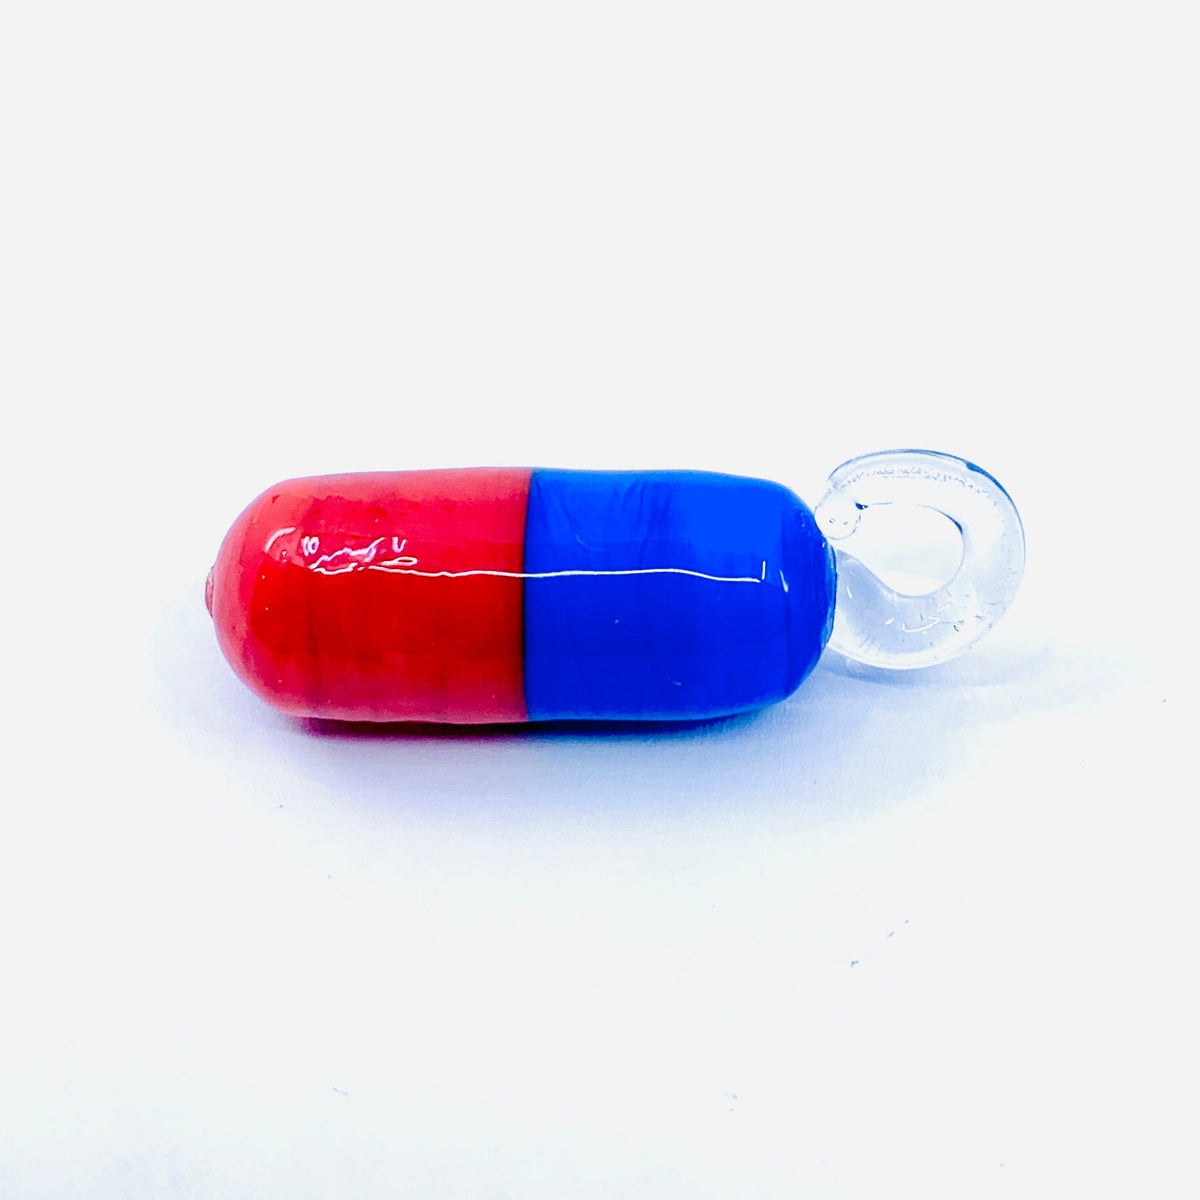 Glass Chill Pill Ornaments/Pendants - Smile Pill 